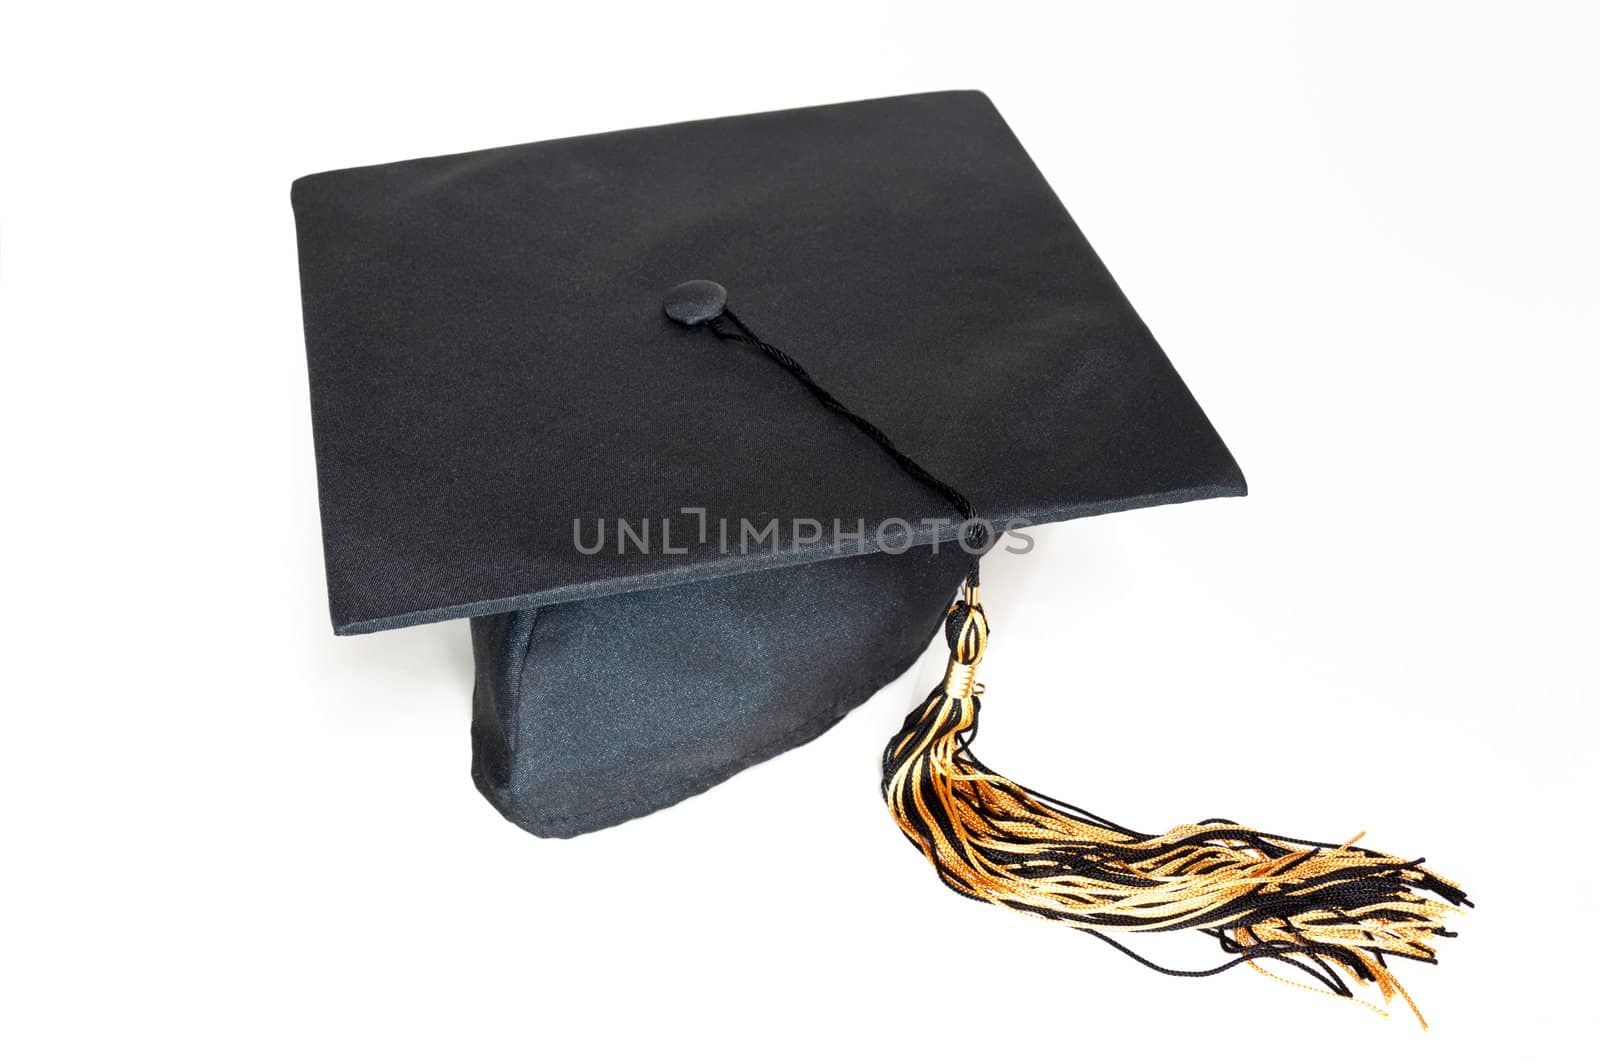 Black graduation cap with tassel. by lobzik